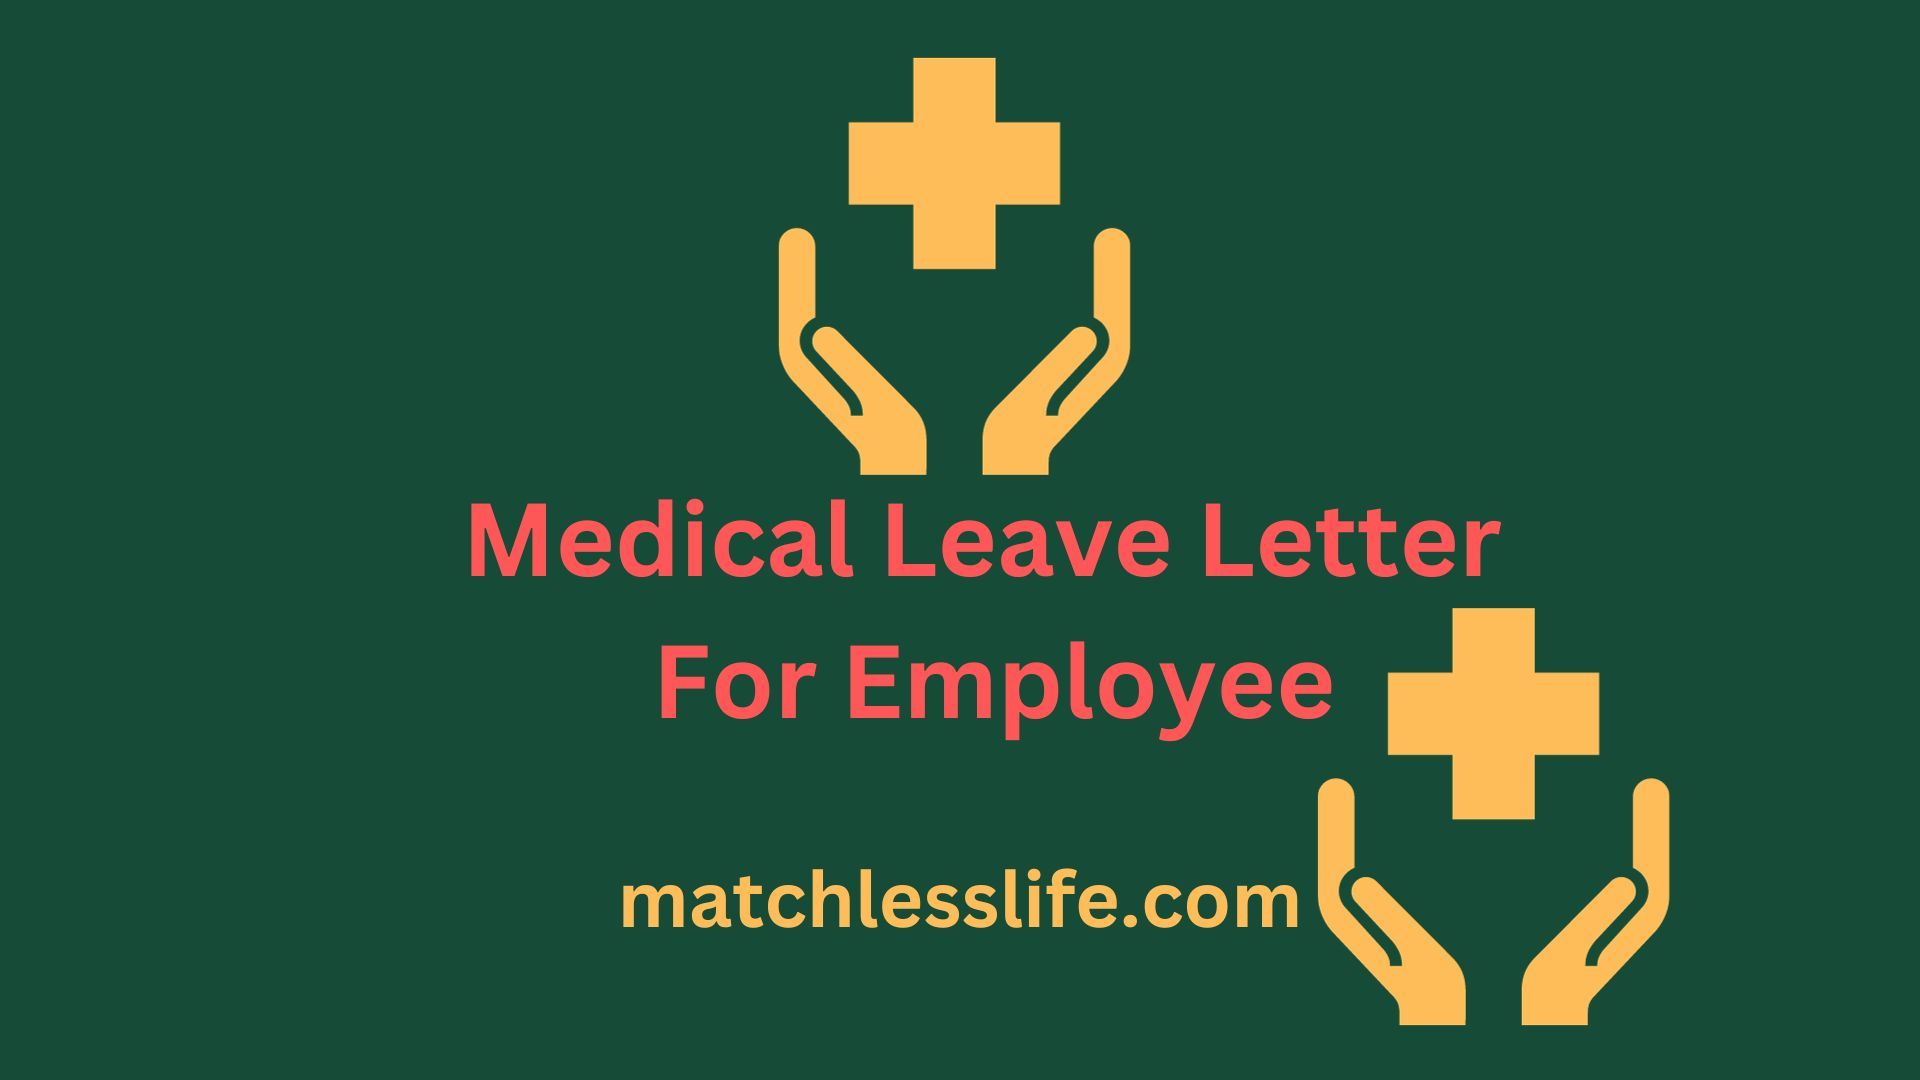 Medical Leave Letter For Employee